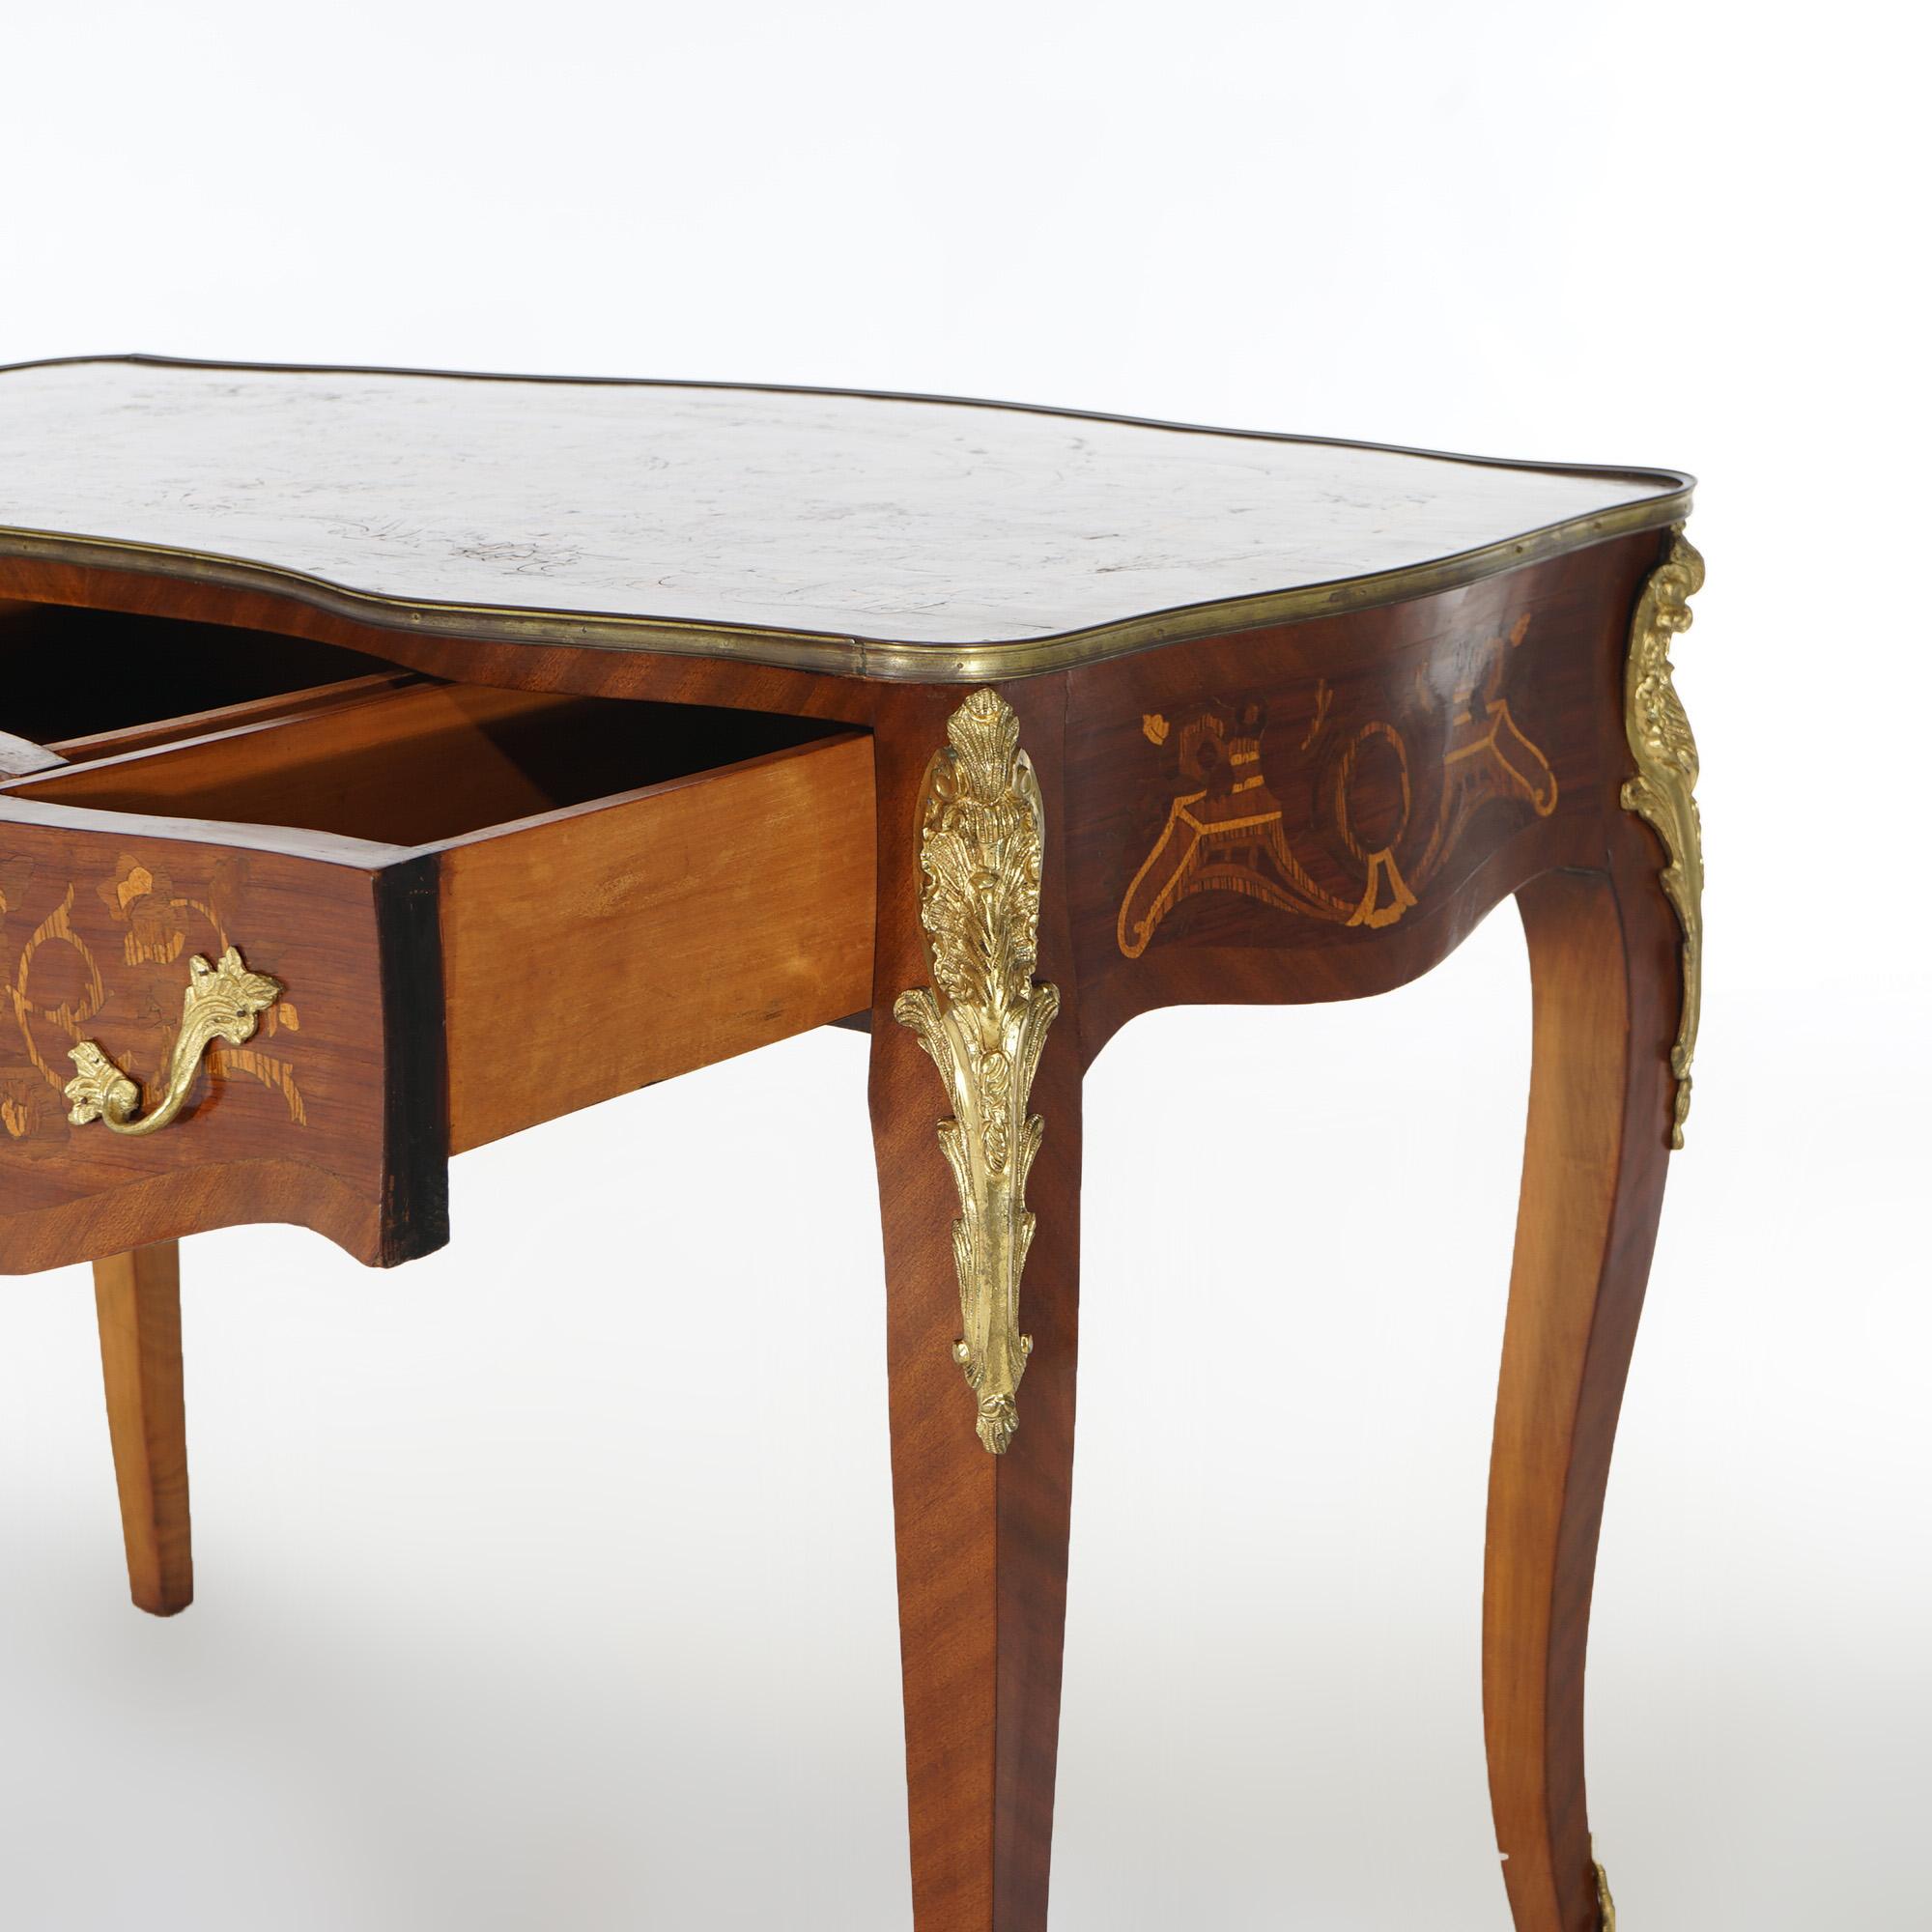 French Louis XIV Kingwood, Mahogany, Ormolu & Satinwood Bureau Plat Desk 20th C For Sale 3